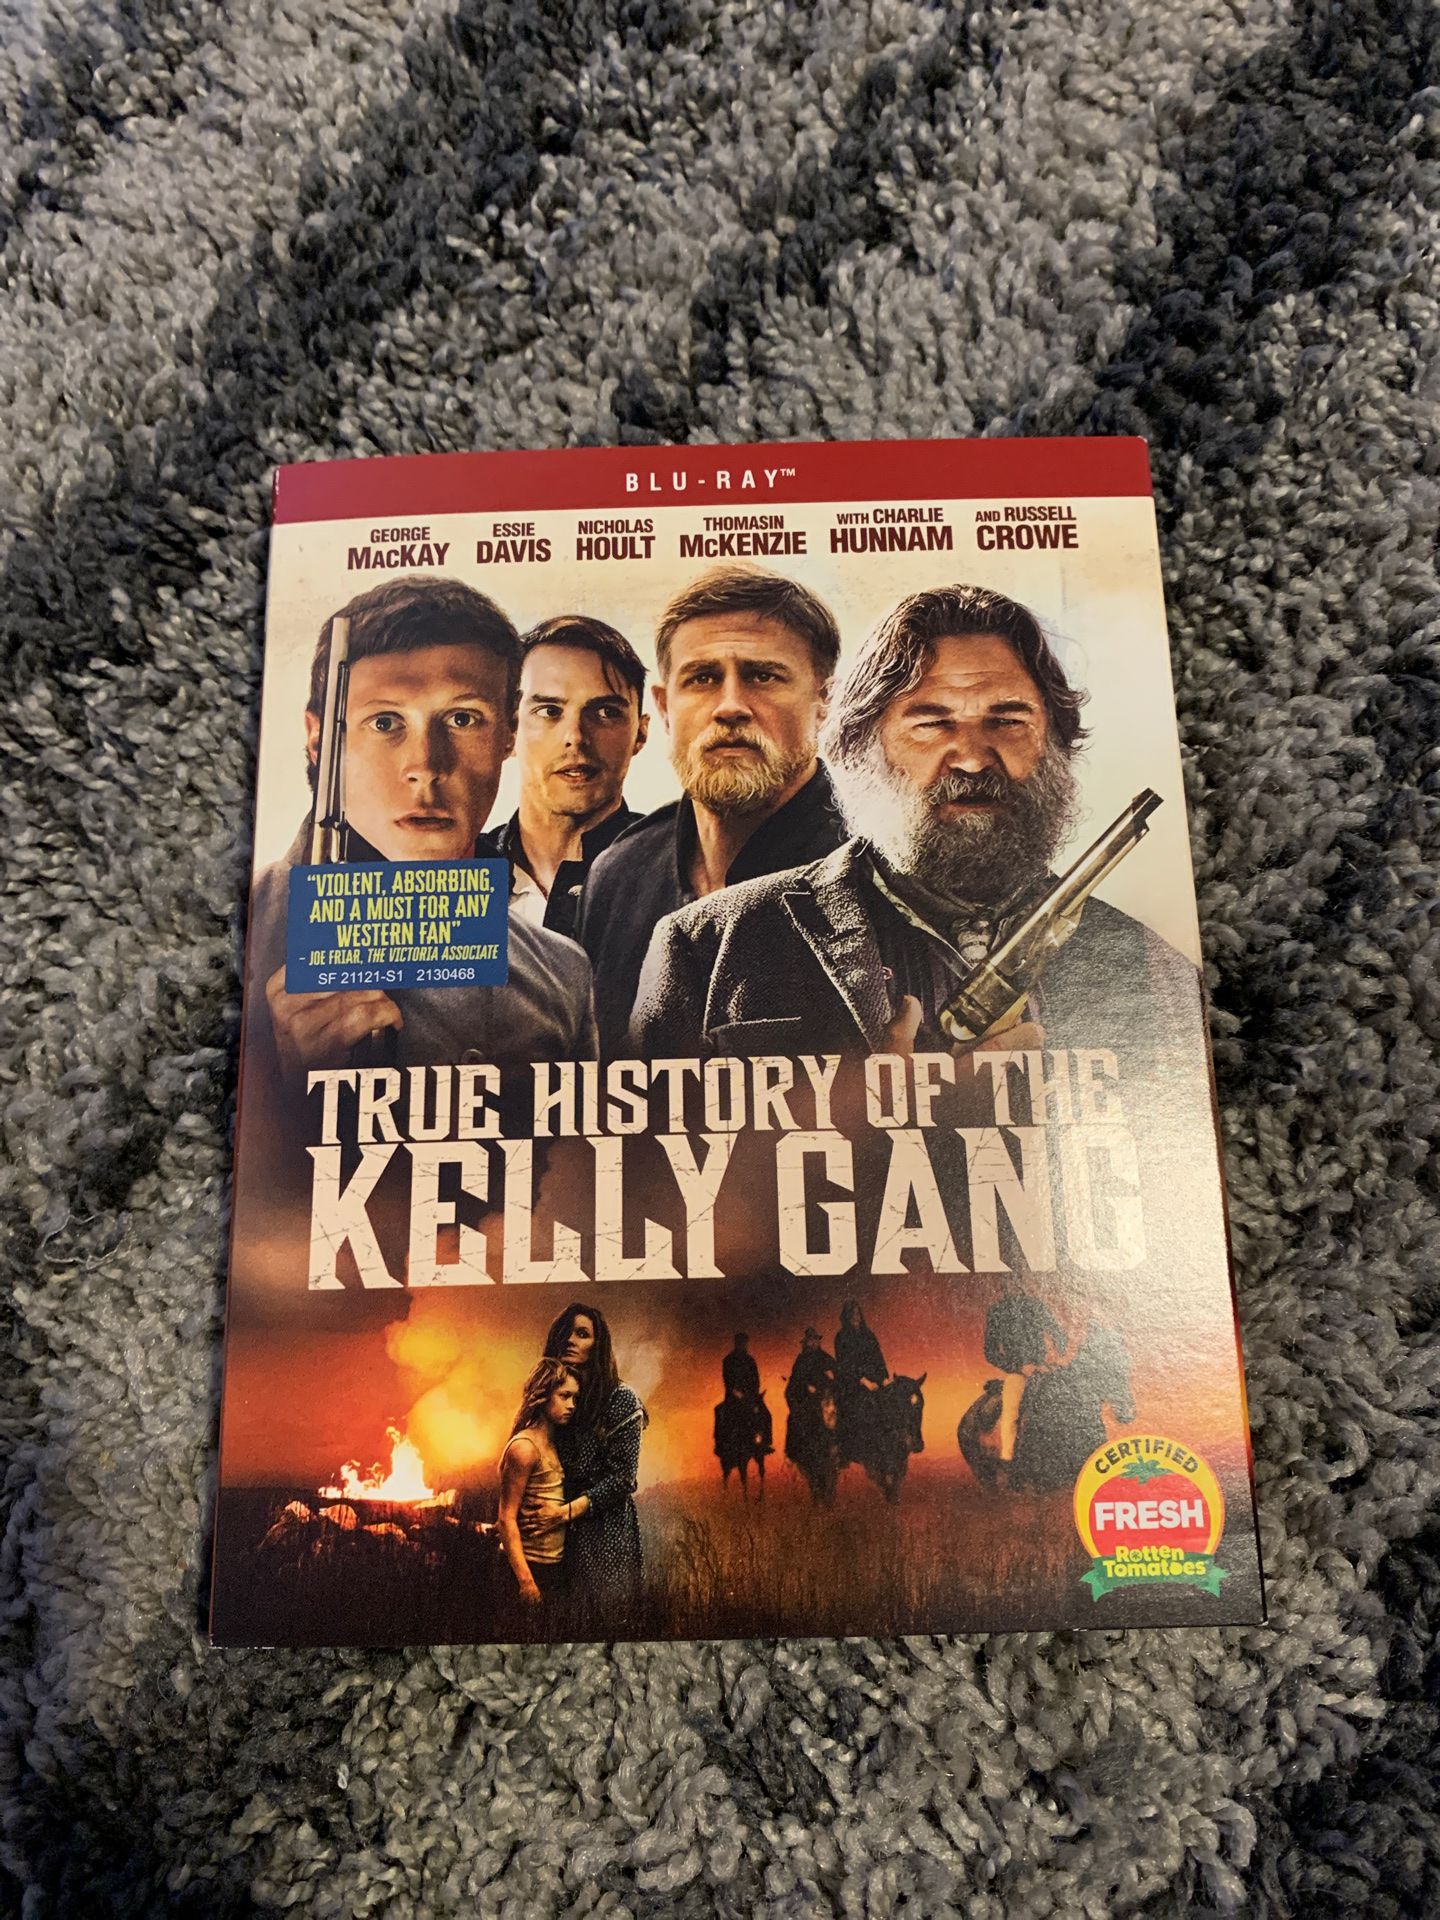 True history of the Kelly gang Blu-ray